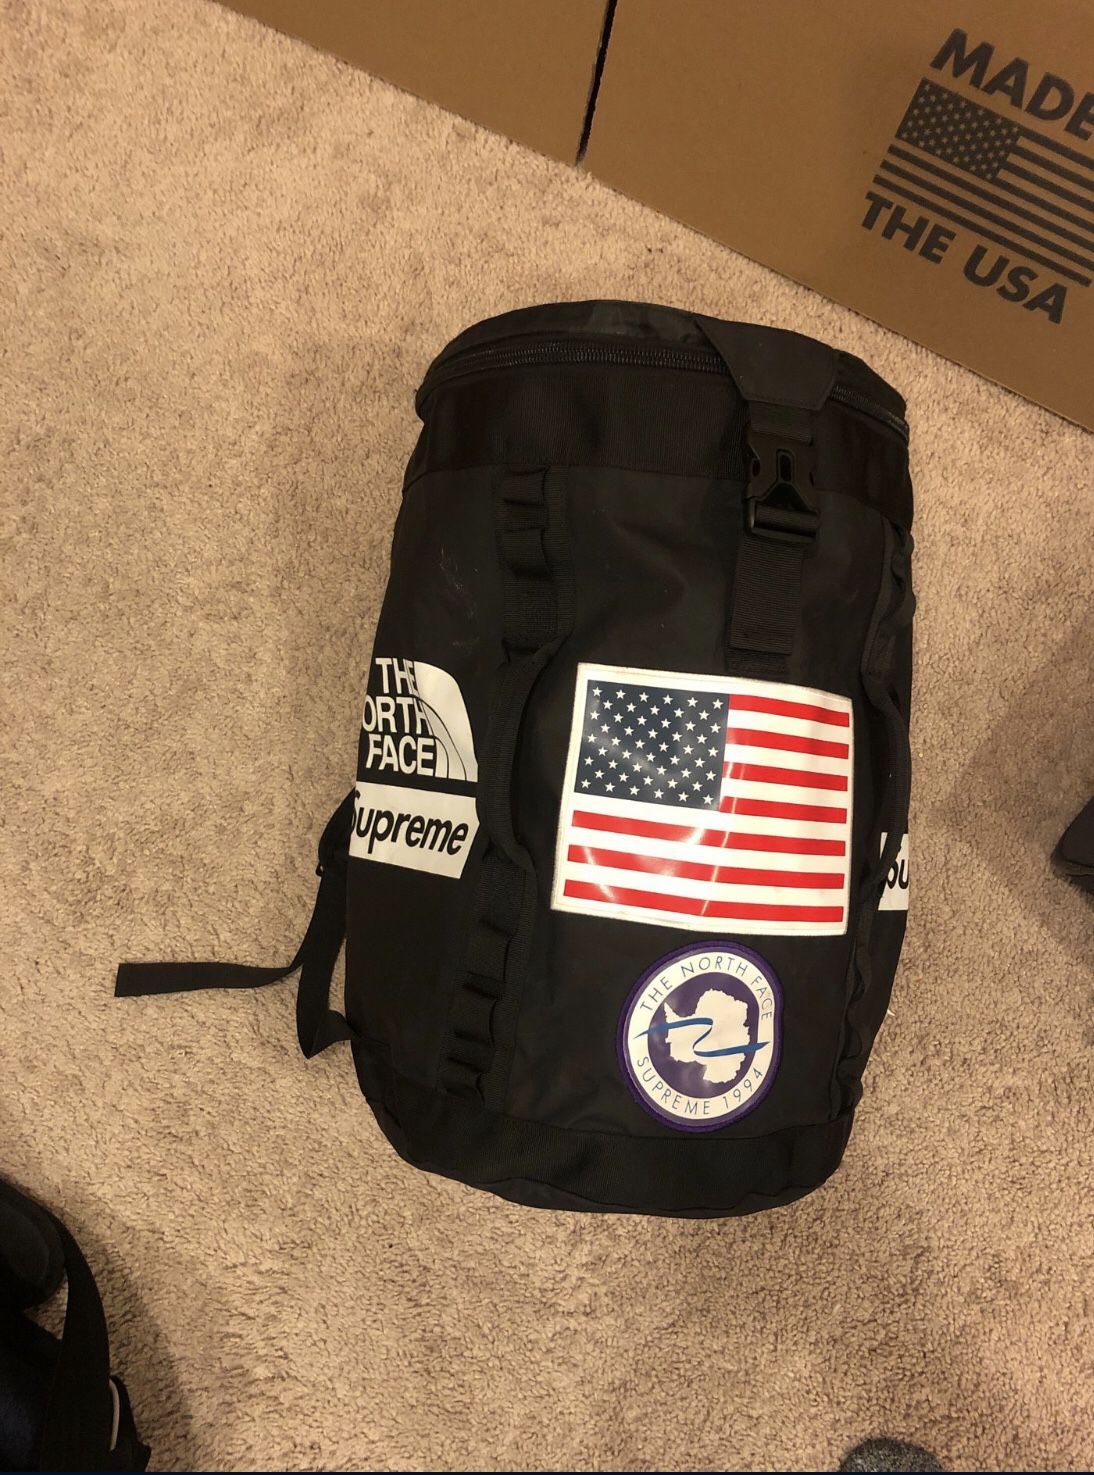 North face supreme backpack duffel bag travel